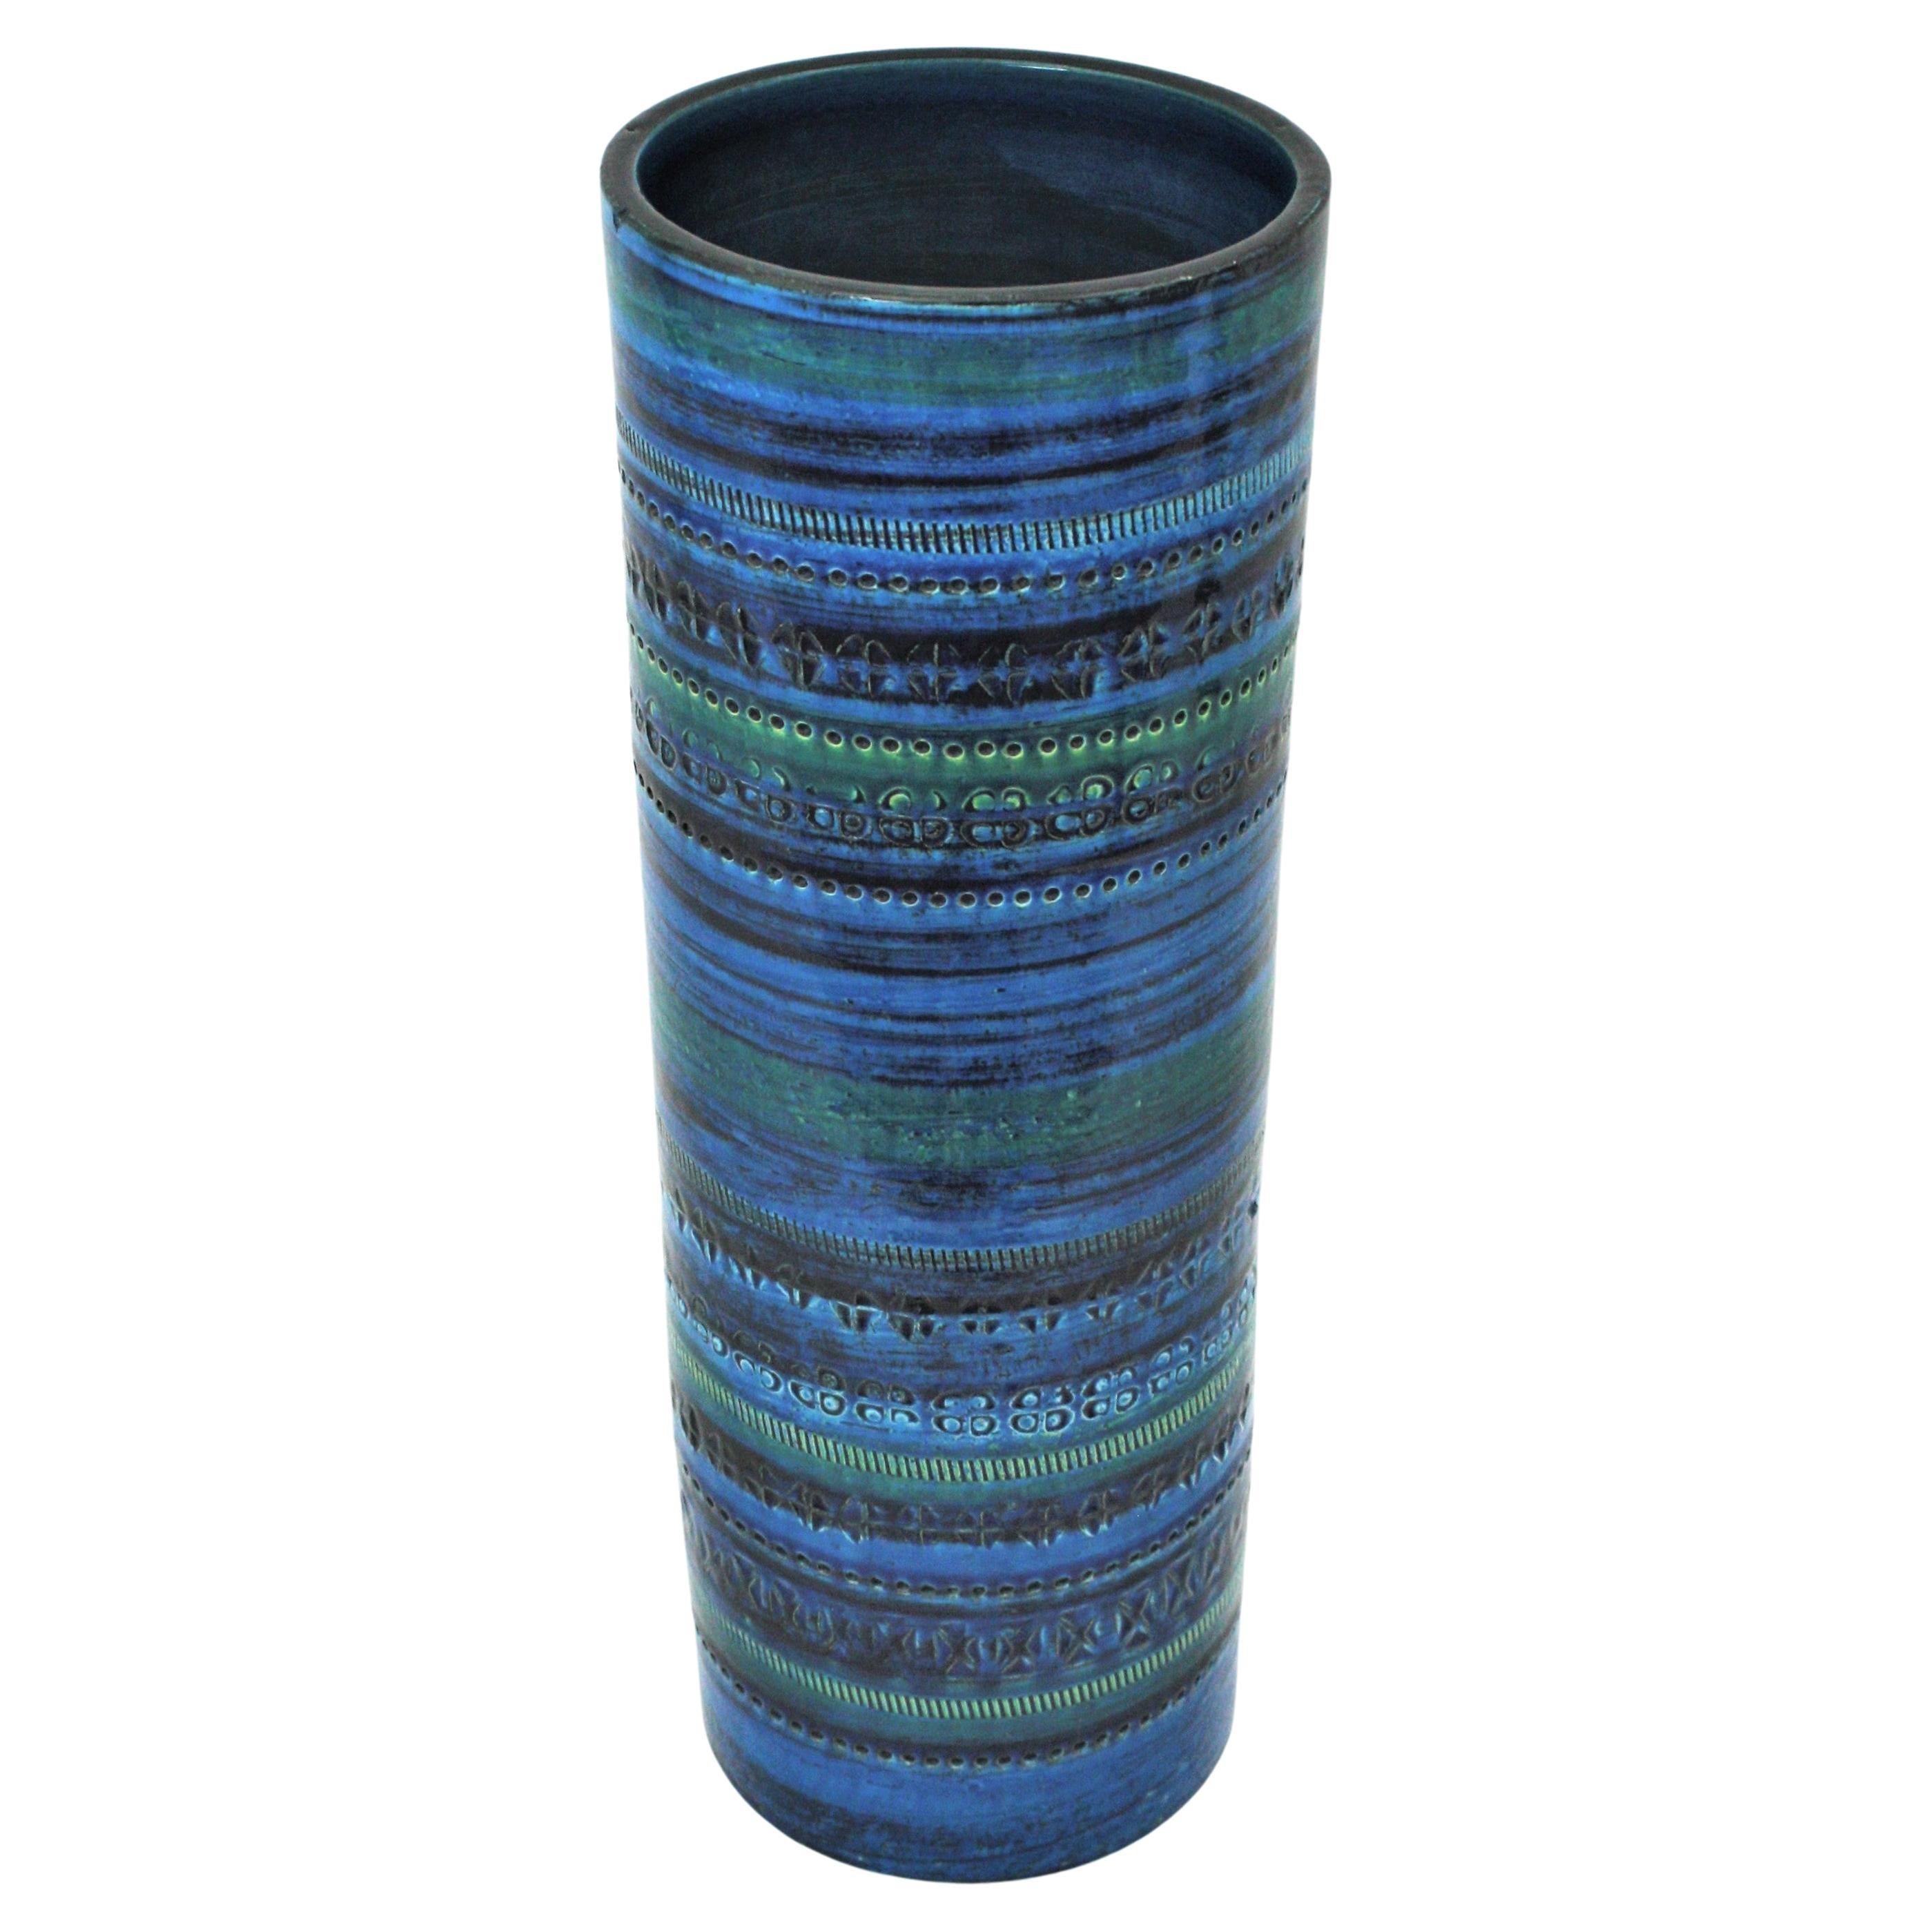 Aldo Londi for Bitossi Rimini Blue Glazed Ceramic Extra Large Vase, Italy, 1960s